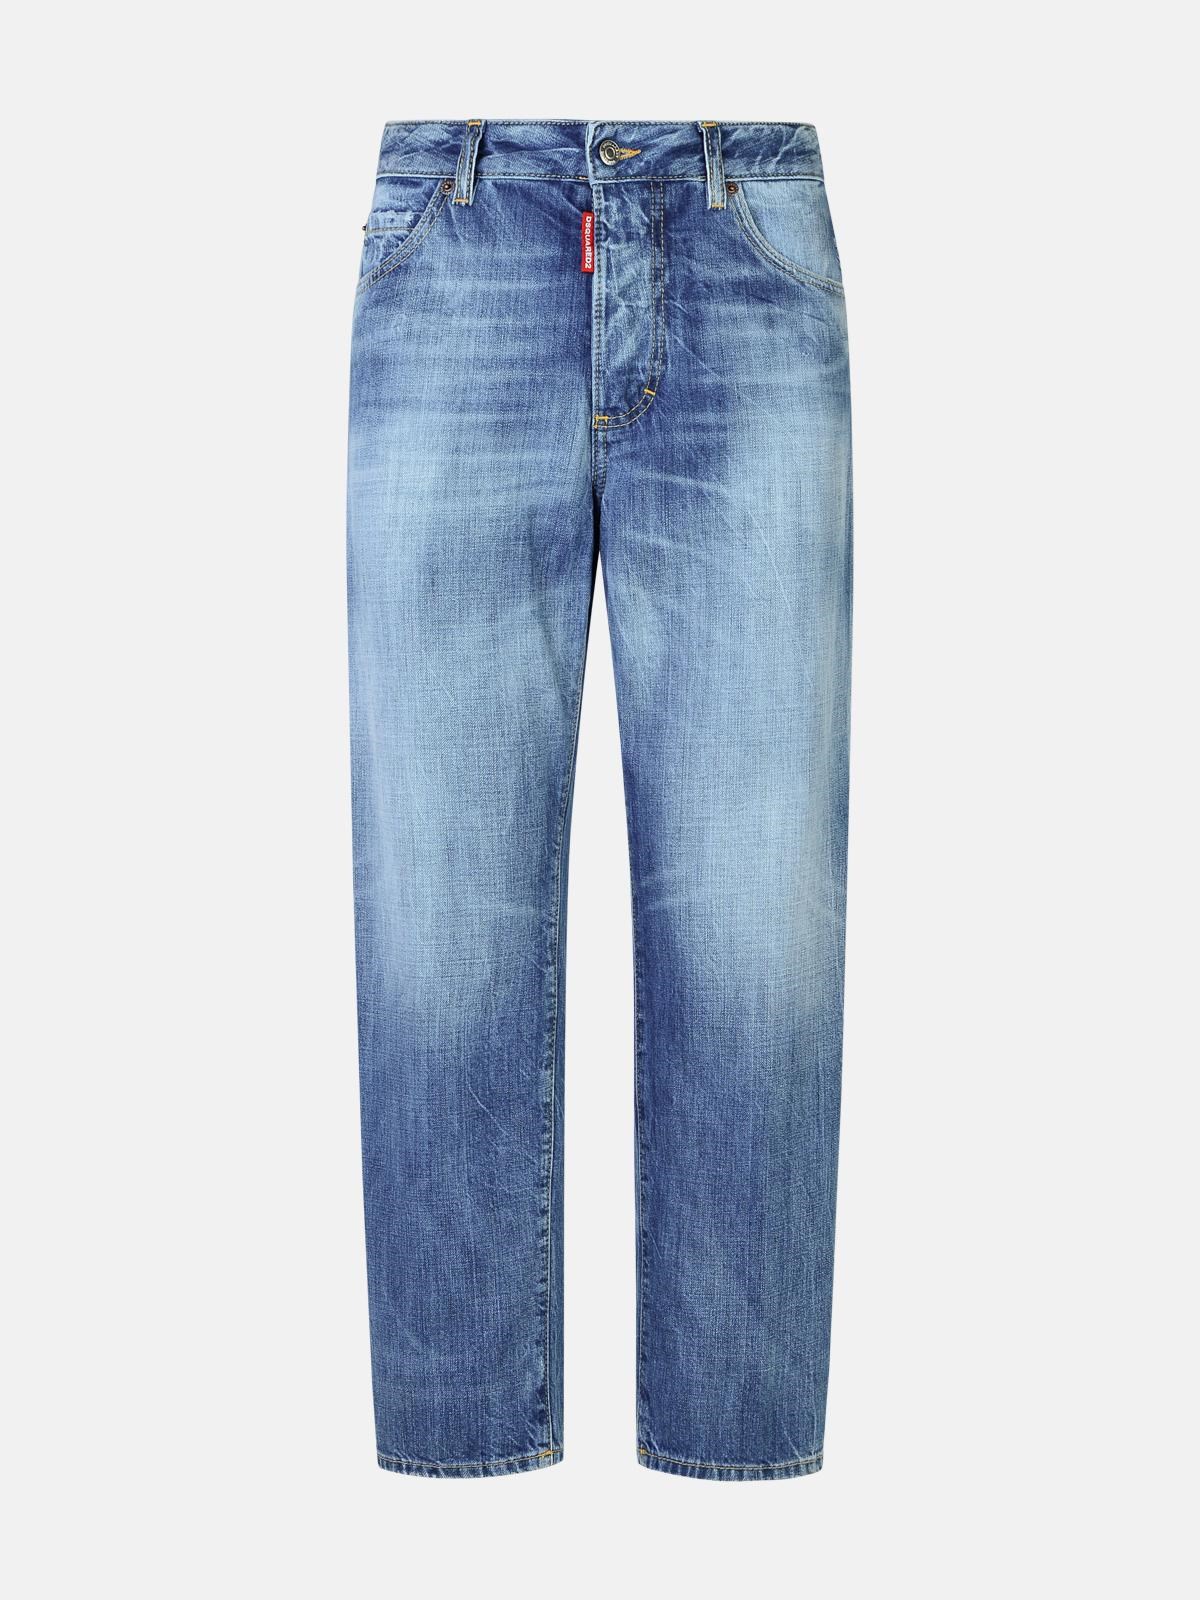 Dsquared2 'boston' Light Blue Denim Jeans